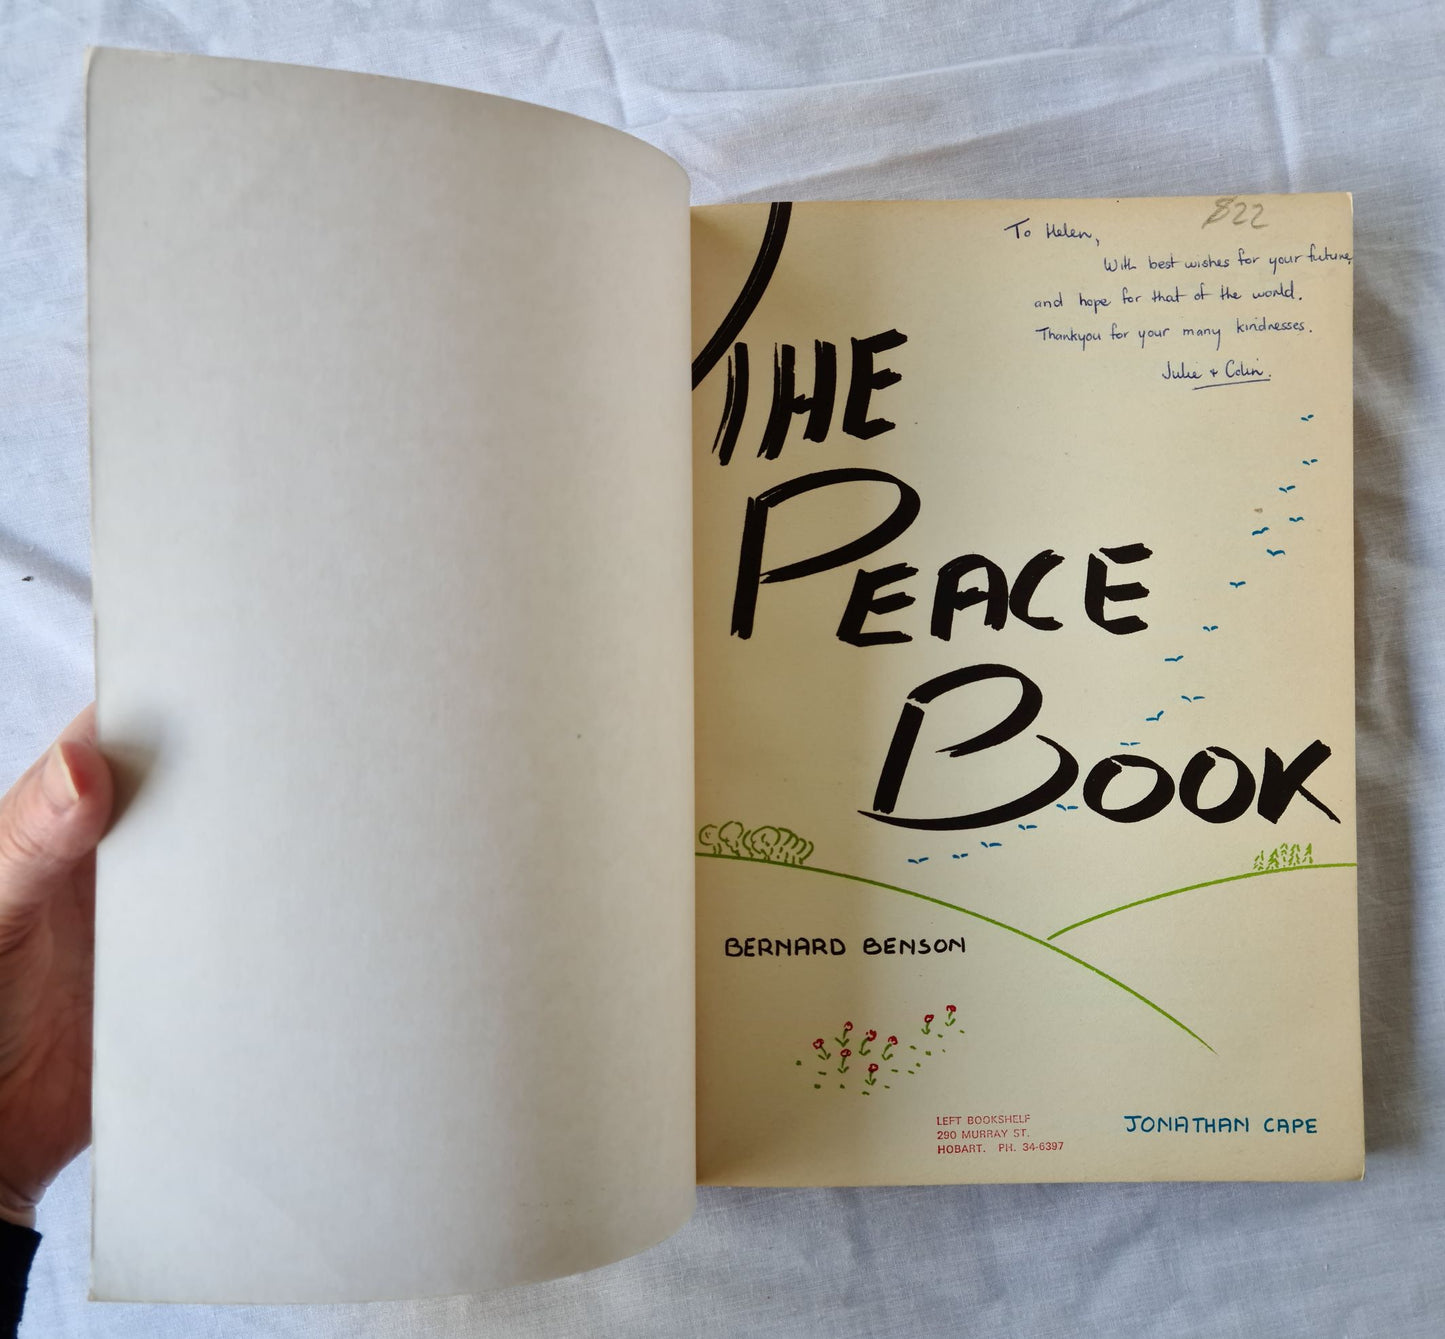 The Peace Book by Bernard Benson